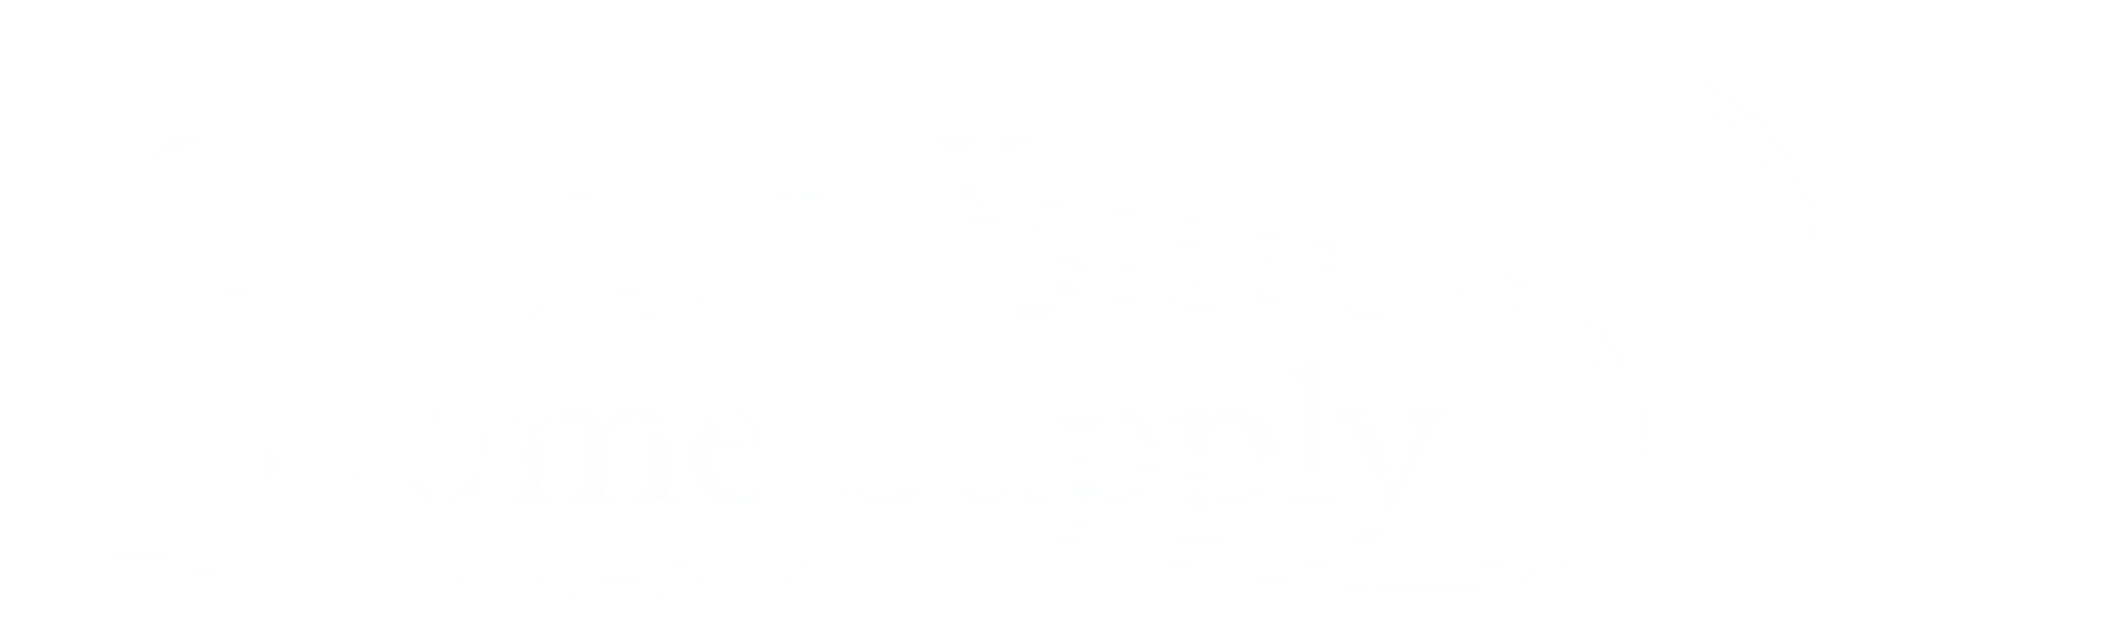 Three Bales Home Supply 